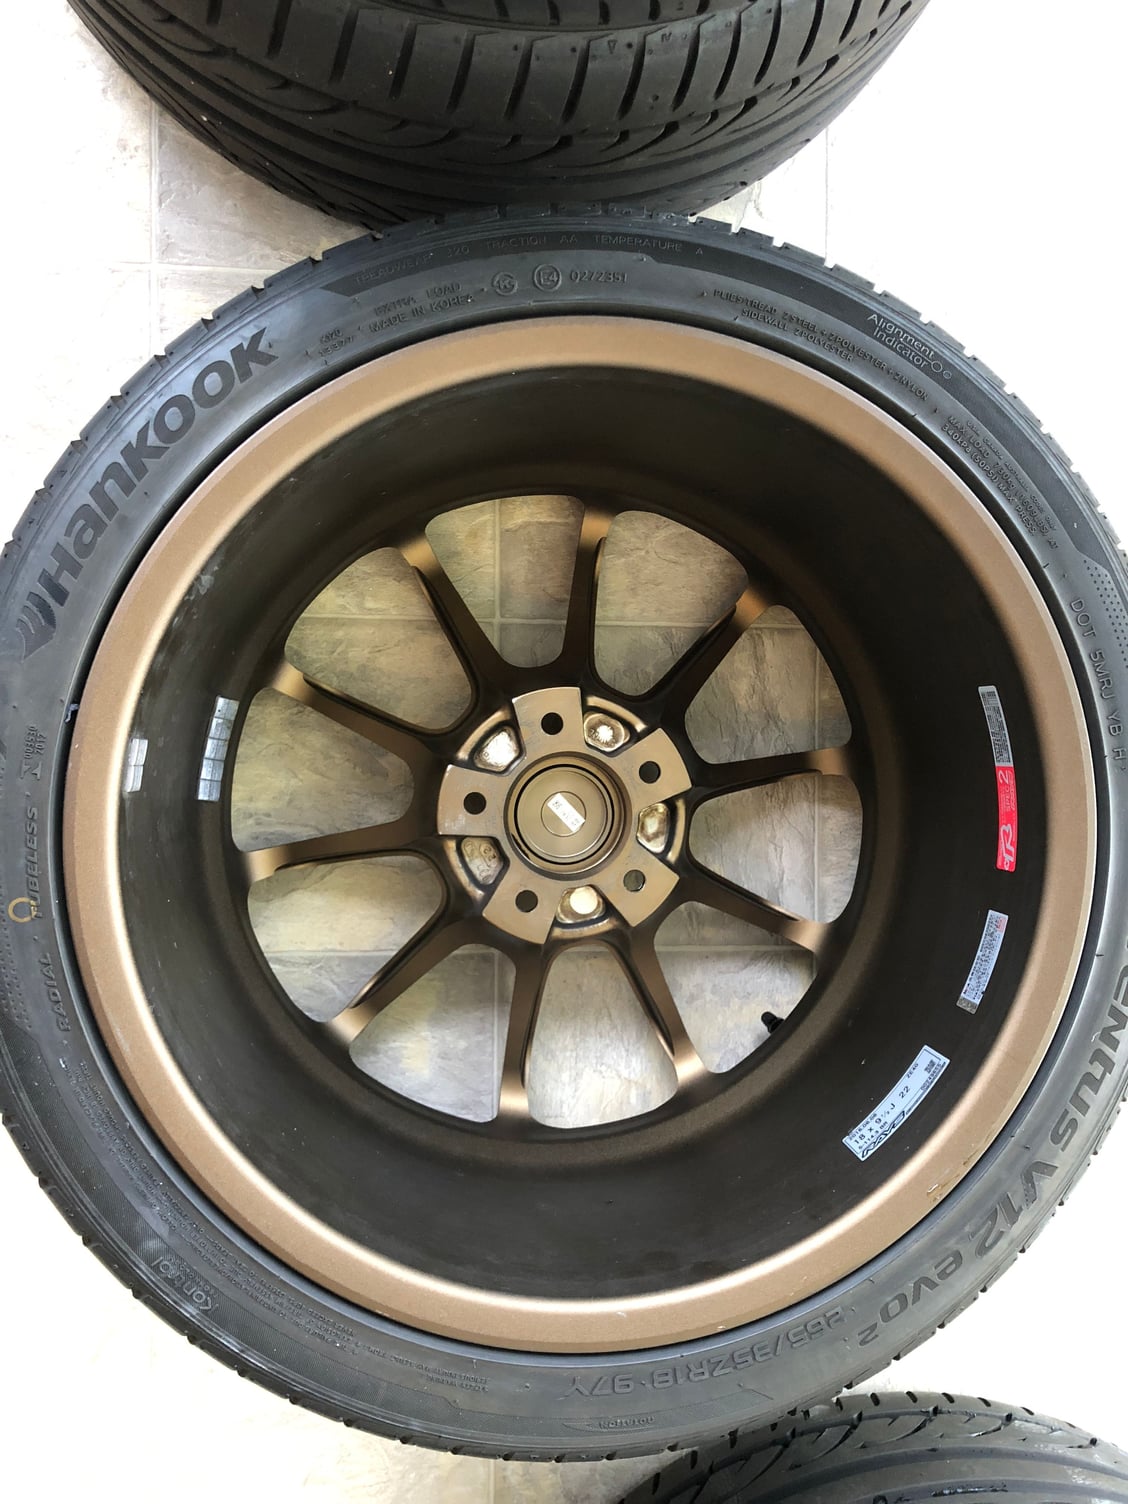 Wheels and Tires/Axles - 4 Bronze Volk Racing ZE40 18x9.5+22 114.3 x 5 - Used - 2008 to 2015 Mitsubishi Lancer Evolution - Alexandria, VA 22310, United States